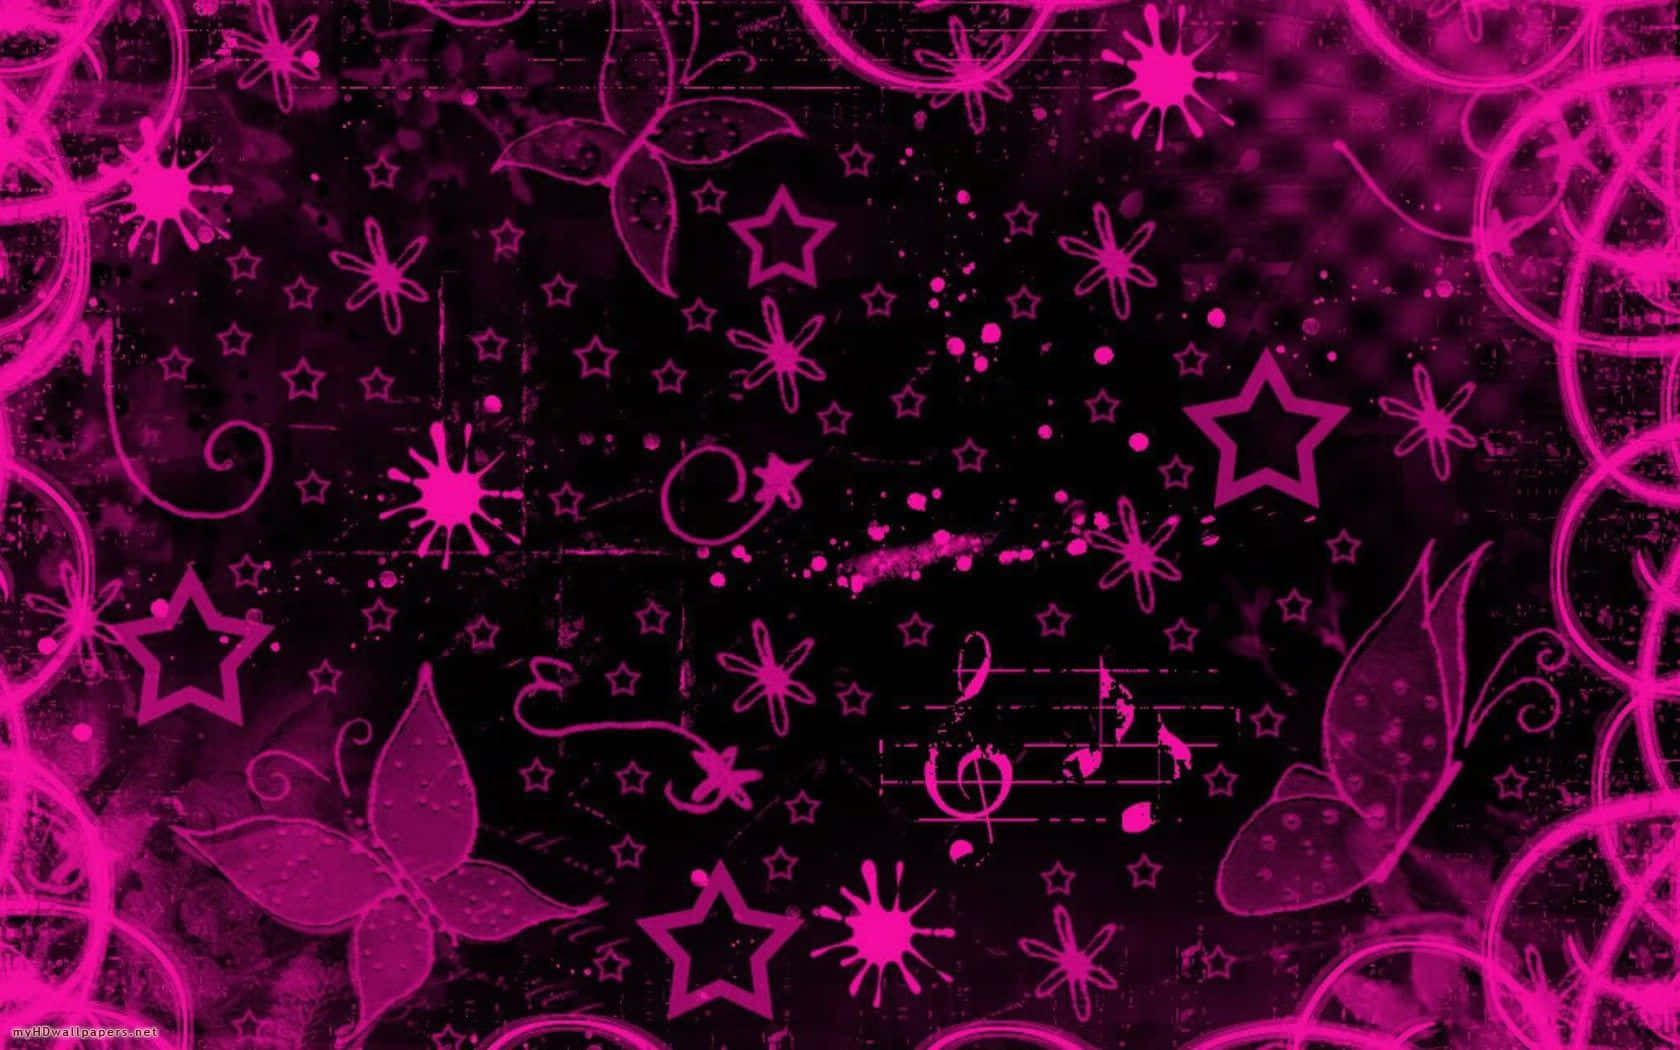 Emo Themed Digital Art Pink And Black Background